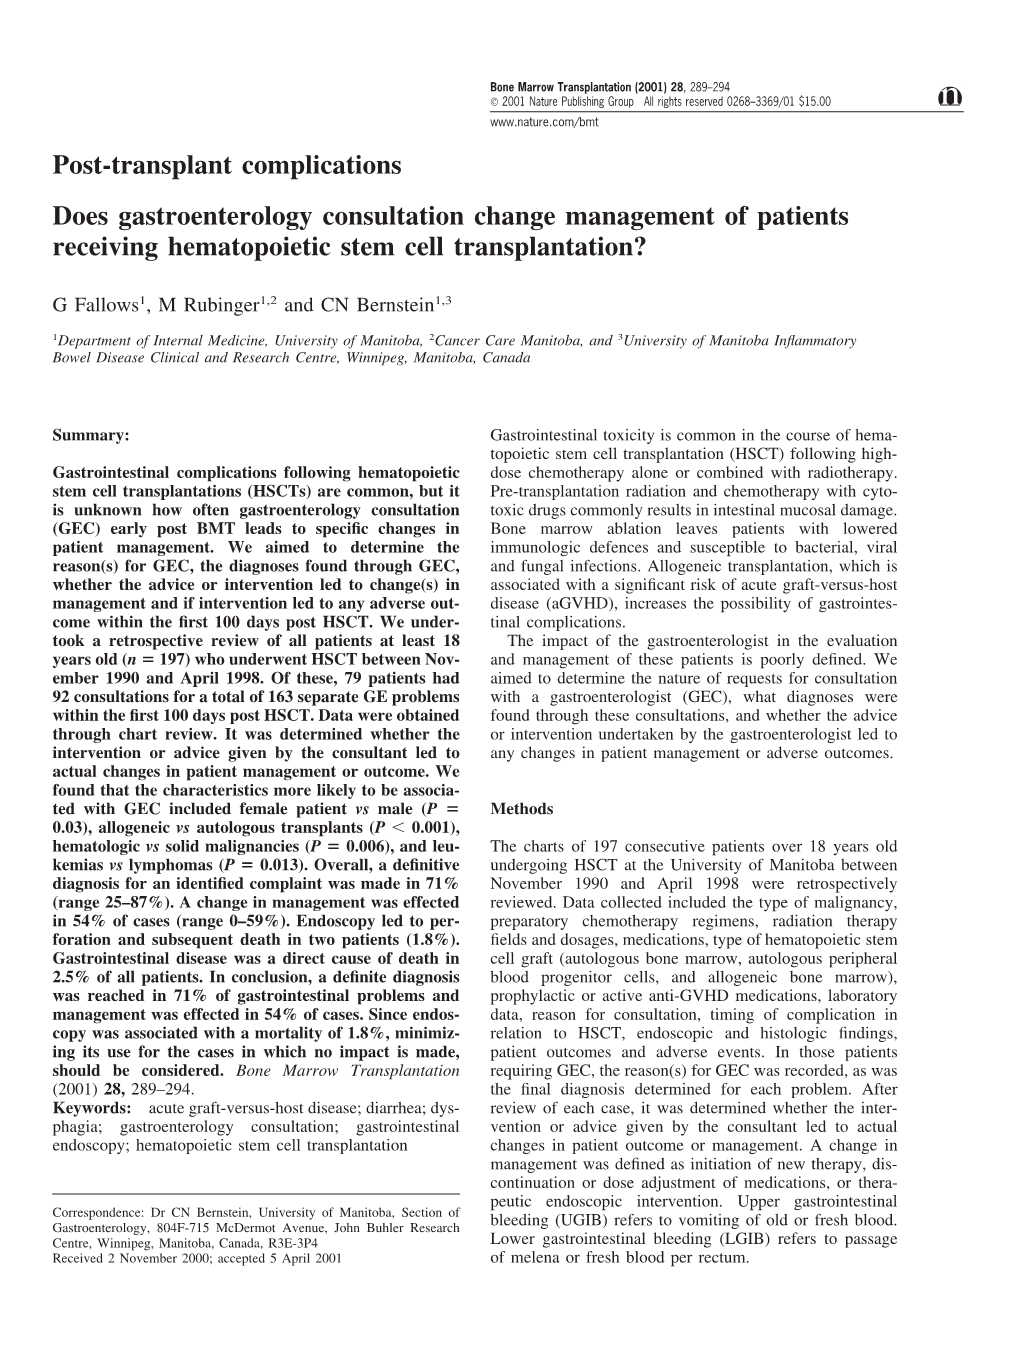 Post-Transplant Complications Does Gastroenterology Consultation Change Management of Patients Receiving Hematopoietic Stem Cell Transplantation?